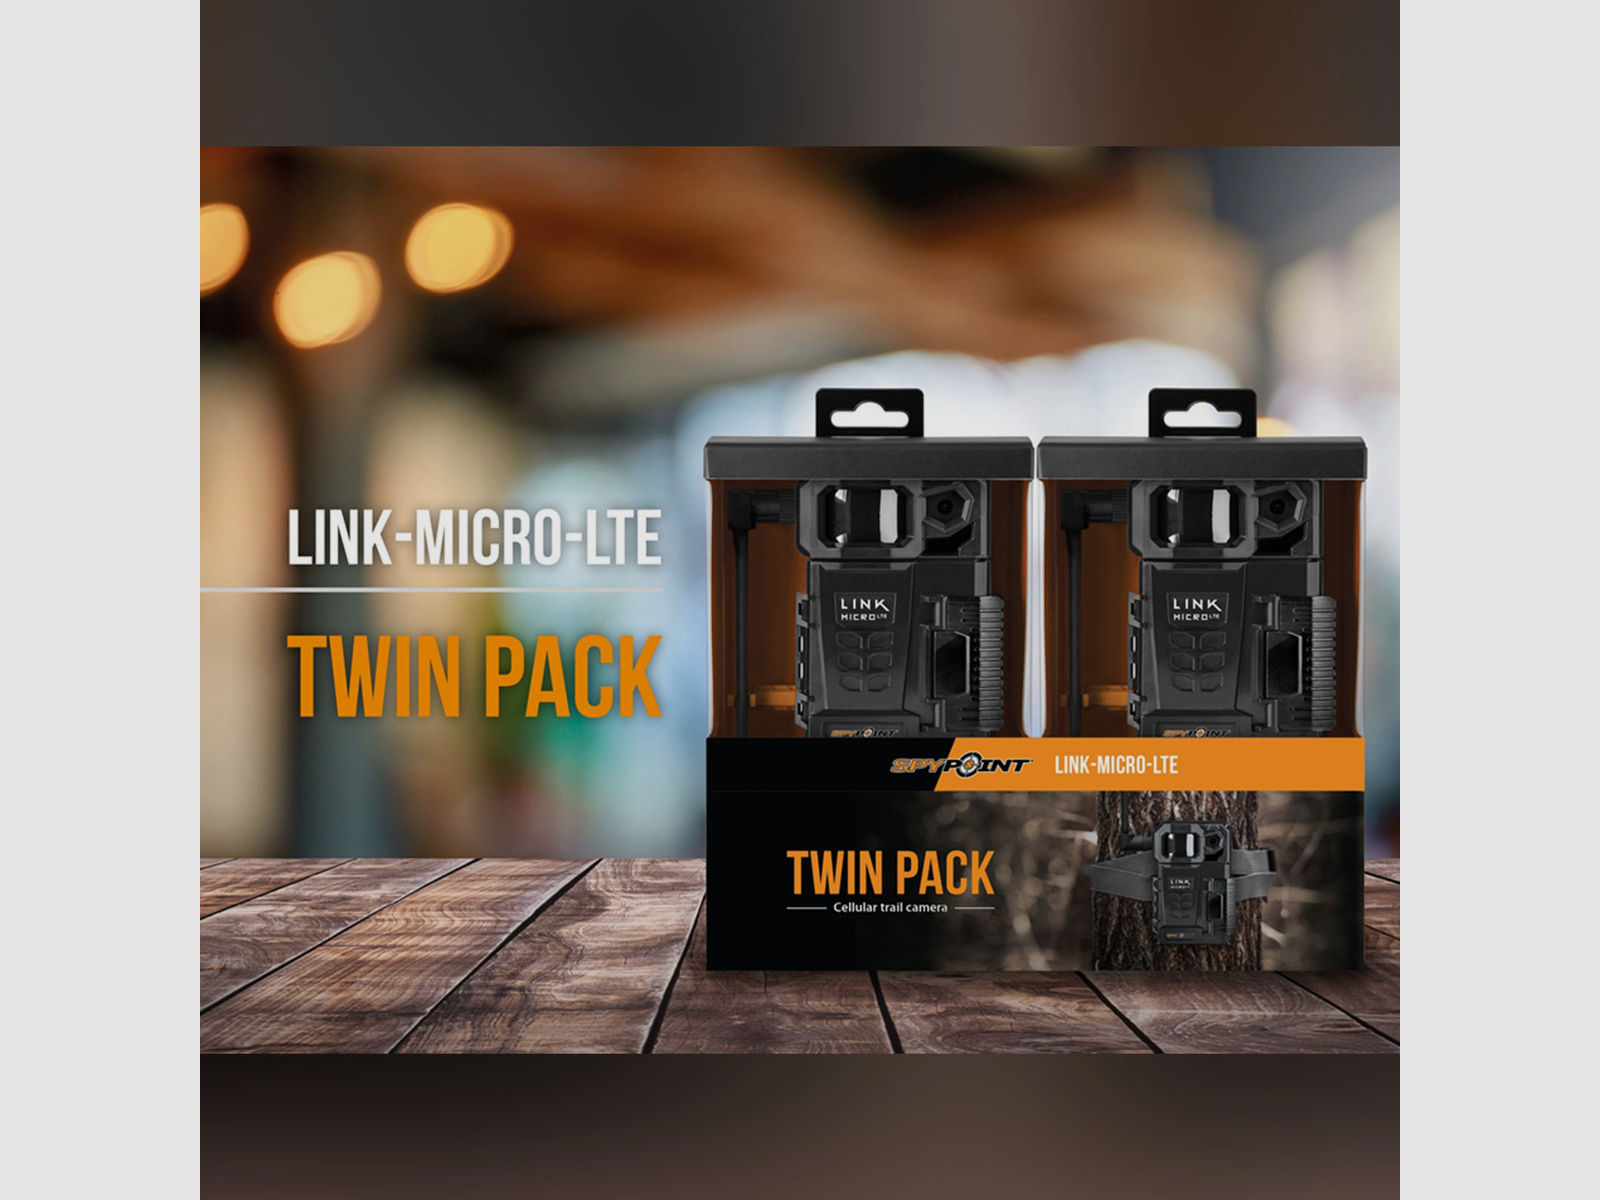 SPYPOINT Wildkamera Link Micro LTE Twin Pack